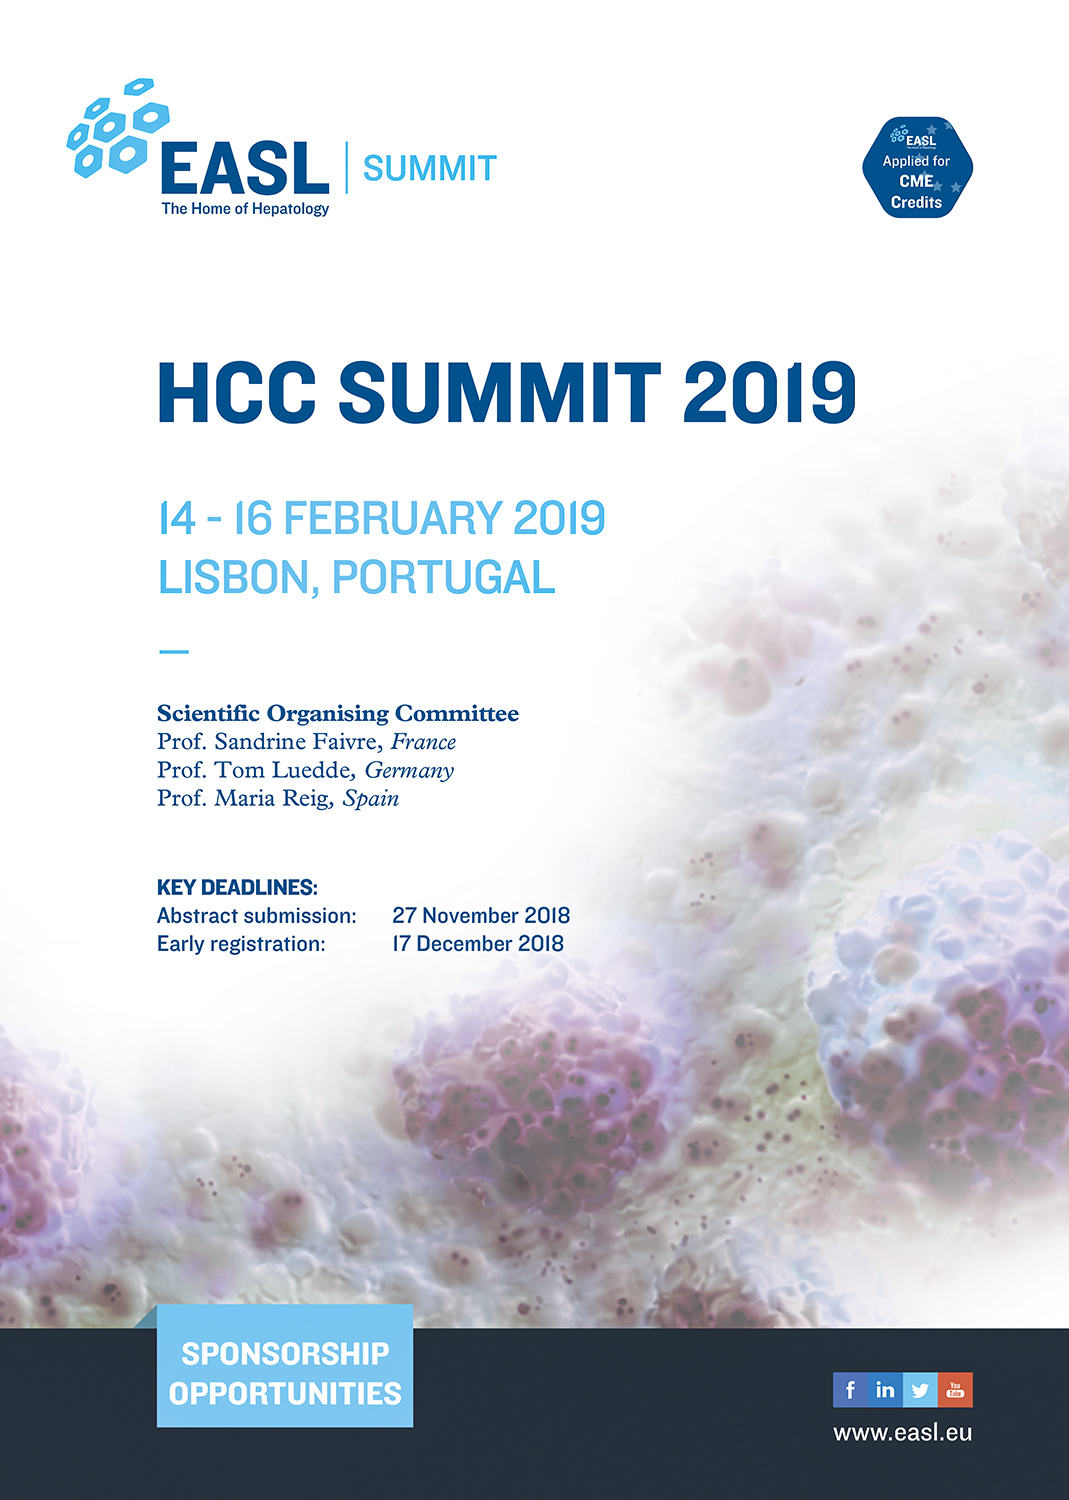 HCC Summit, Lisbona, 14-16 febbraio 2019